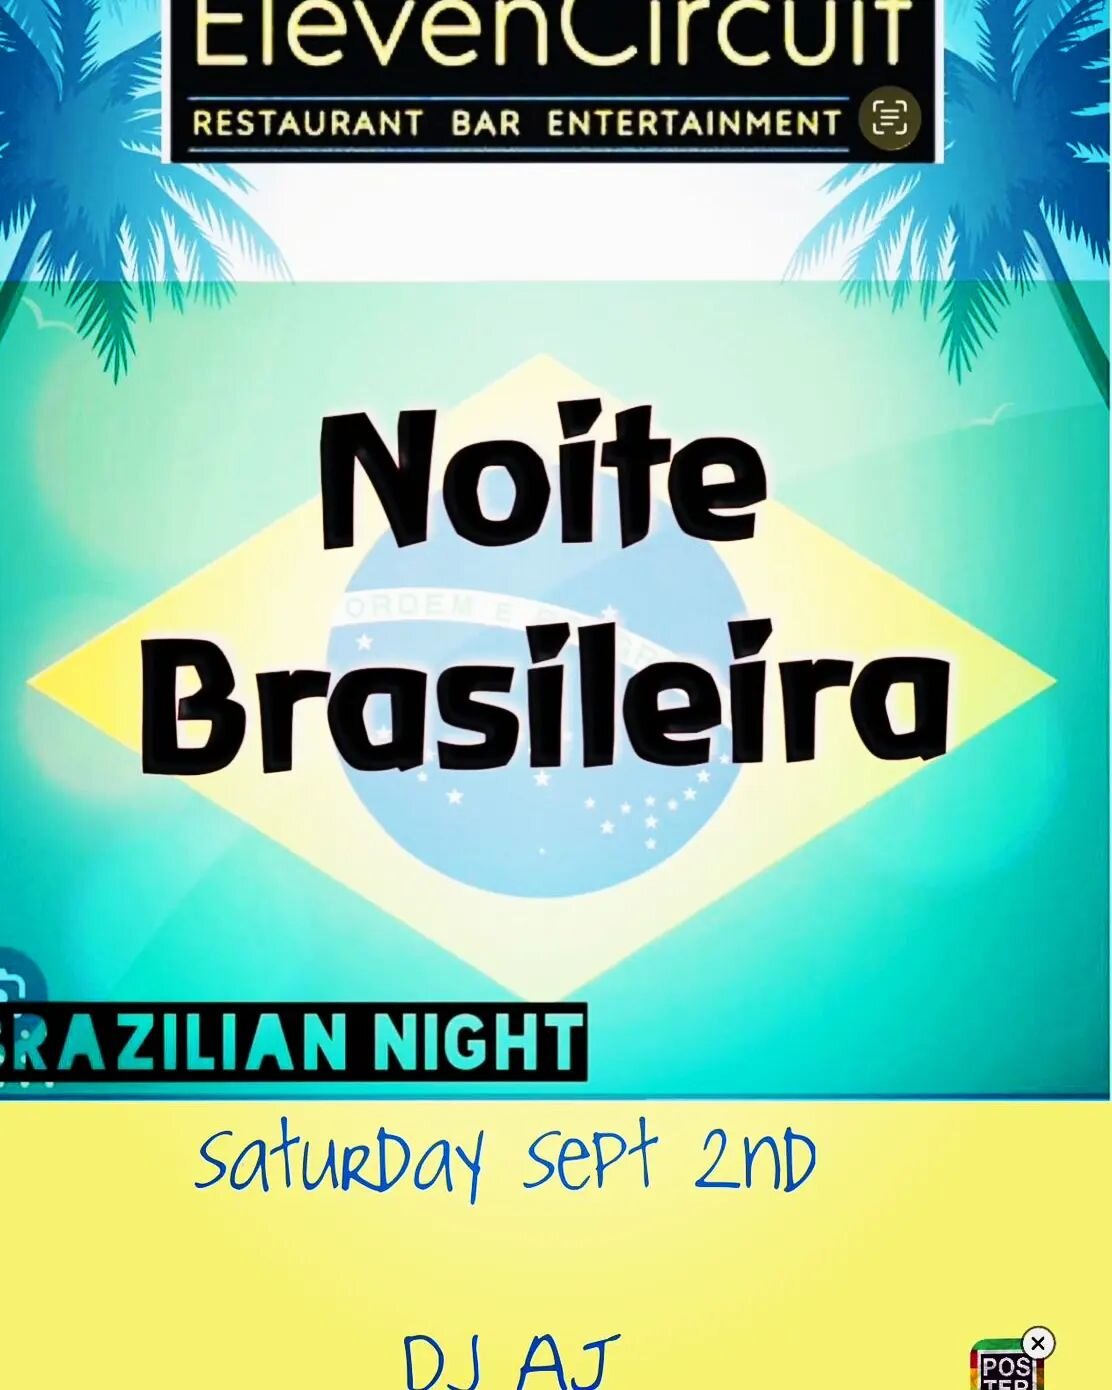 Brazilian night tonight with Dj AJ. Come out and have fun 💥

#music #oakbluffsmarthasvineyard #oakbluffs #mv #braziliannight #dj #funtimes #noite #musica #latino #brazilera #happy #beer #redbull #tequila #cacha&ccedil;a #placetobe #placetovisit #dan